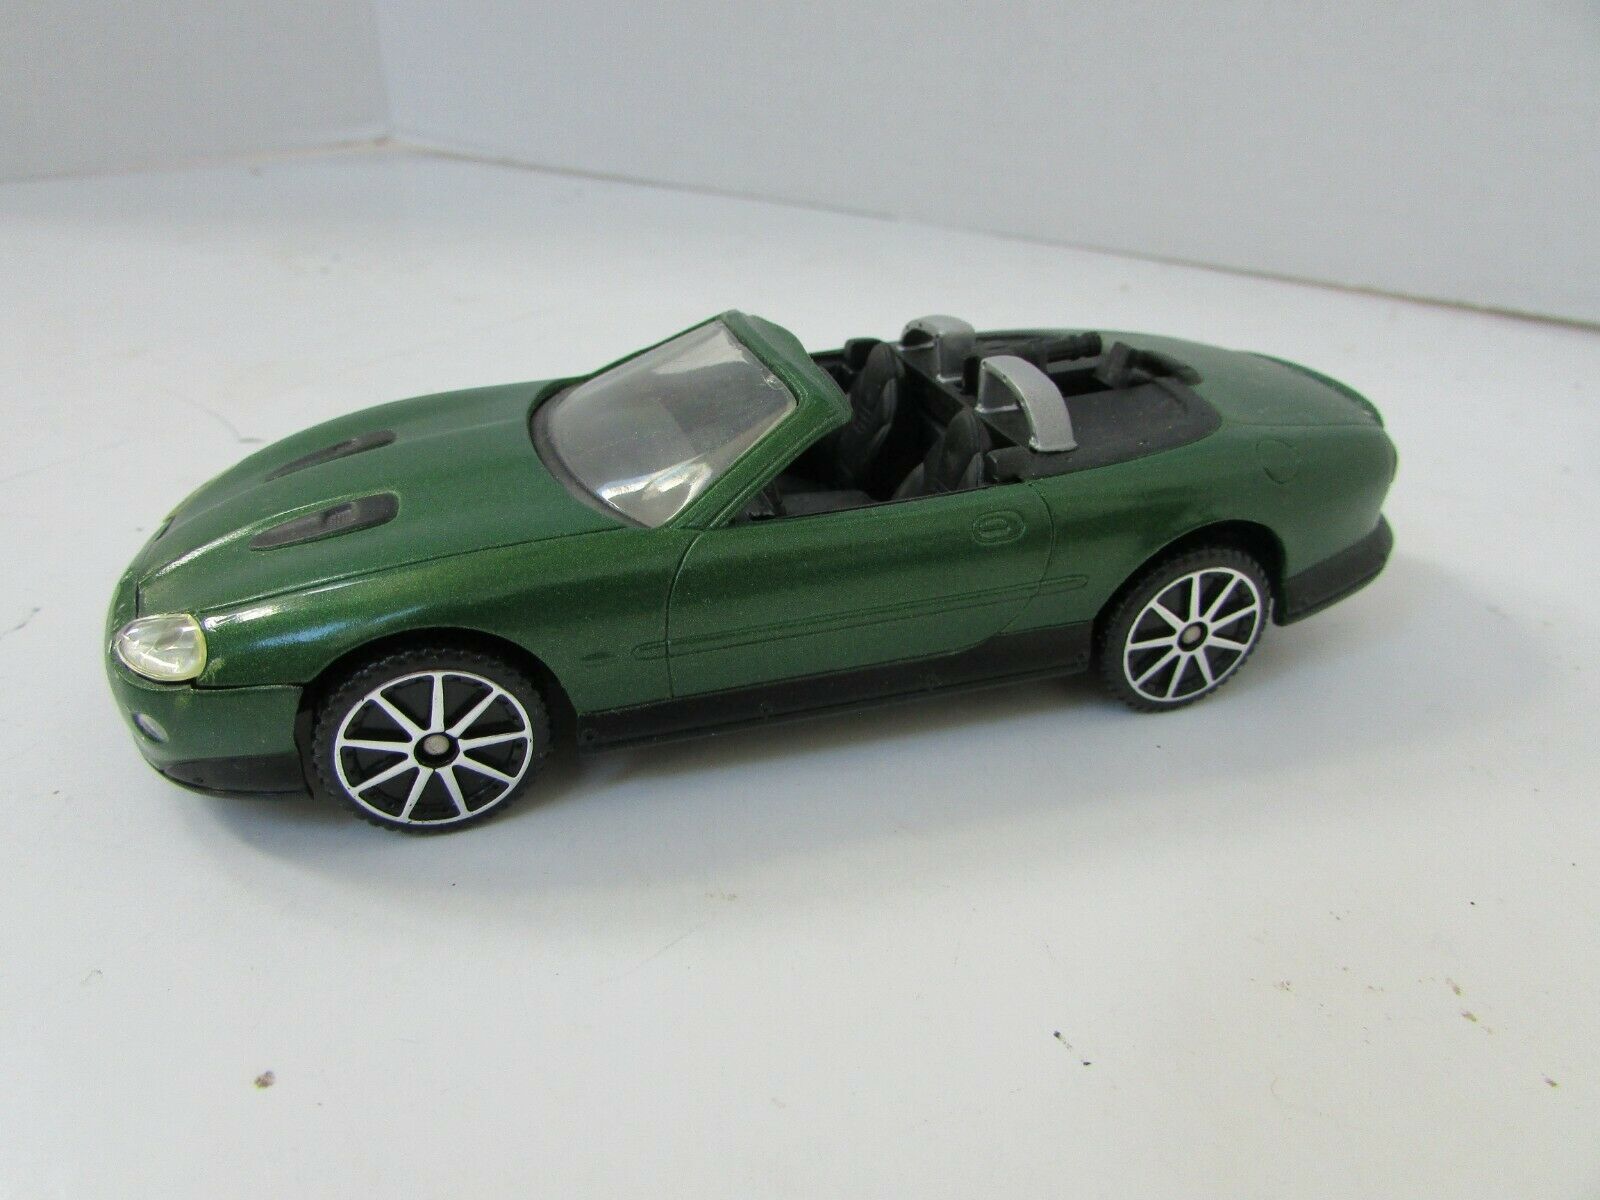 CORGI DIECAST CAR JAGUAR XKR GREEN CONVERTIBLE JAMES BOND 007 5.25"L   LotD - $14.83